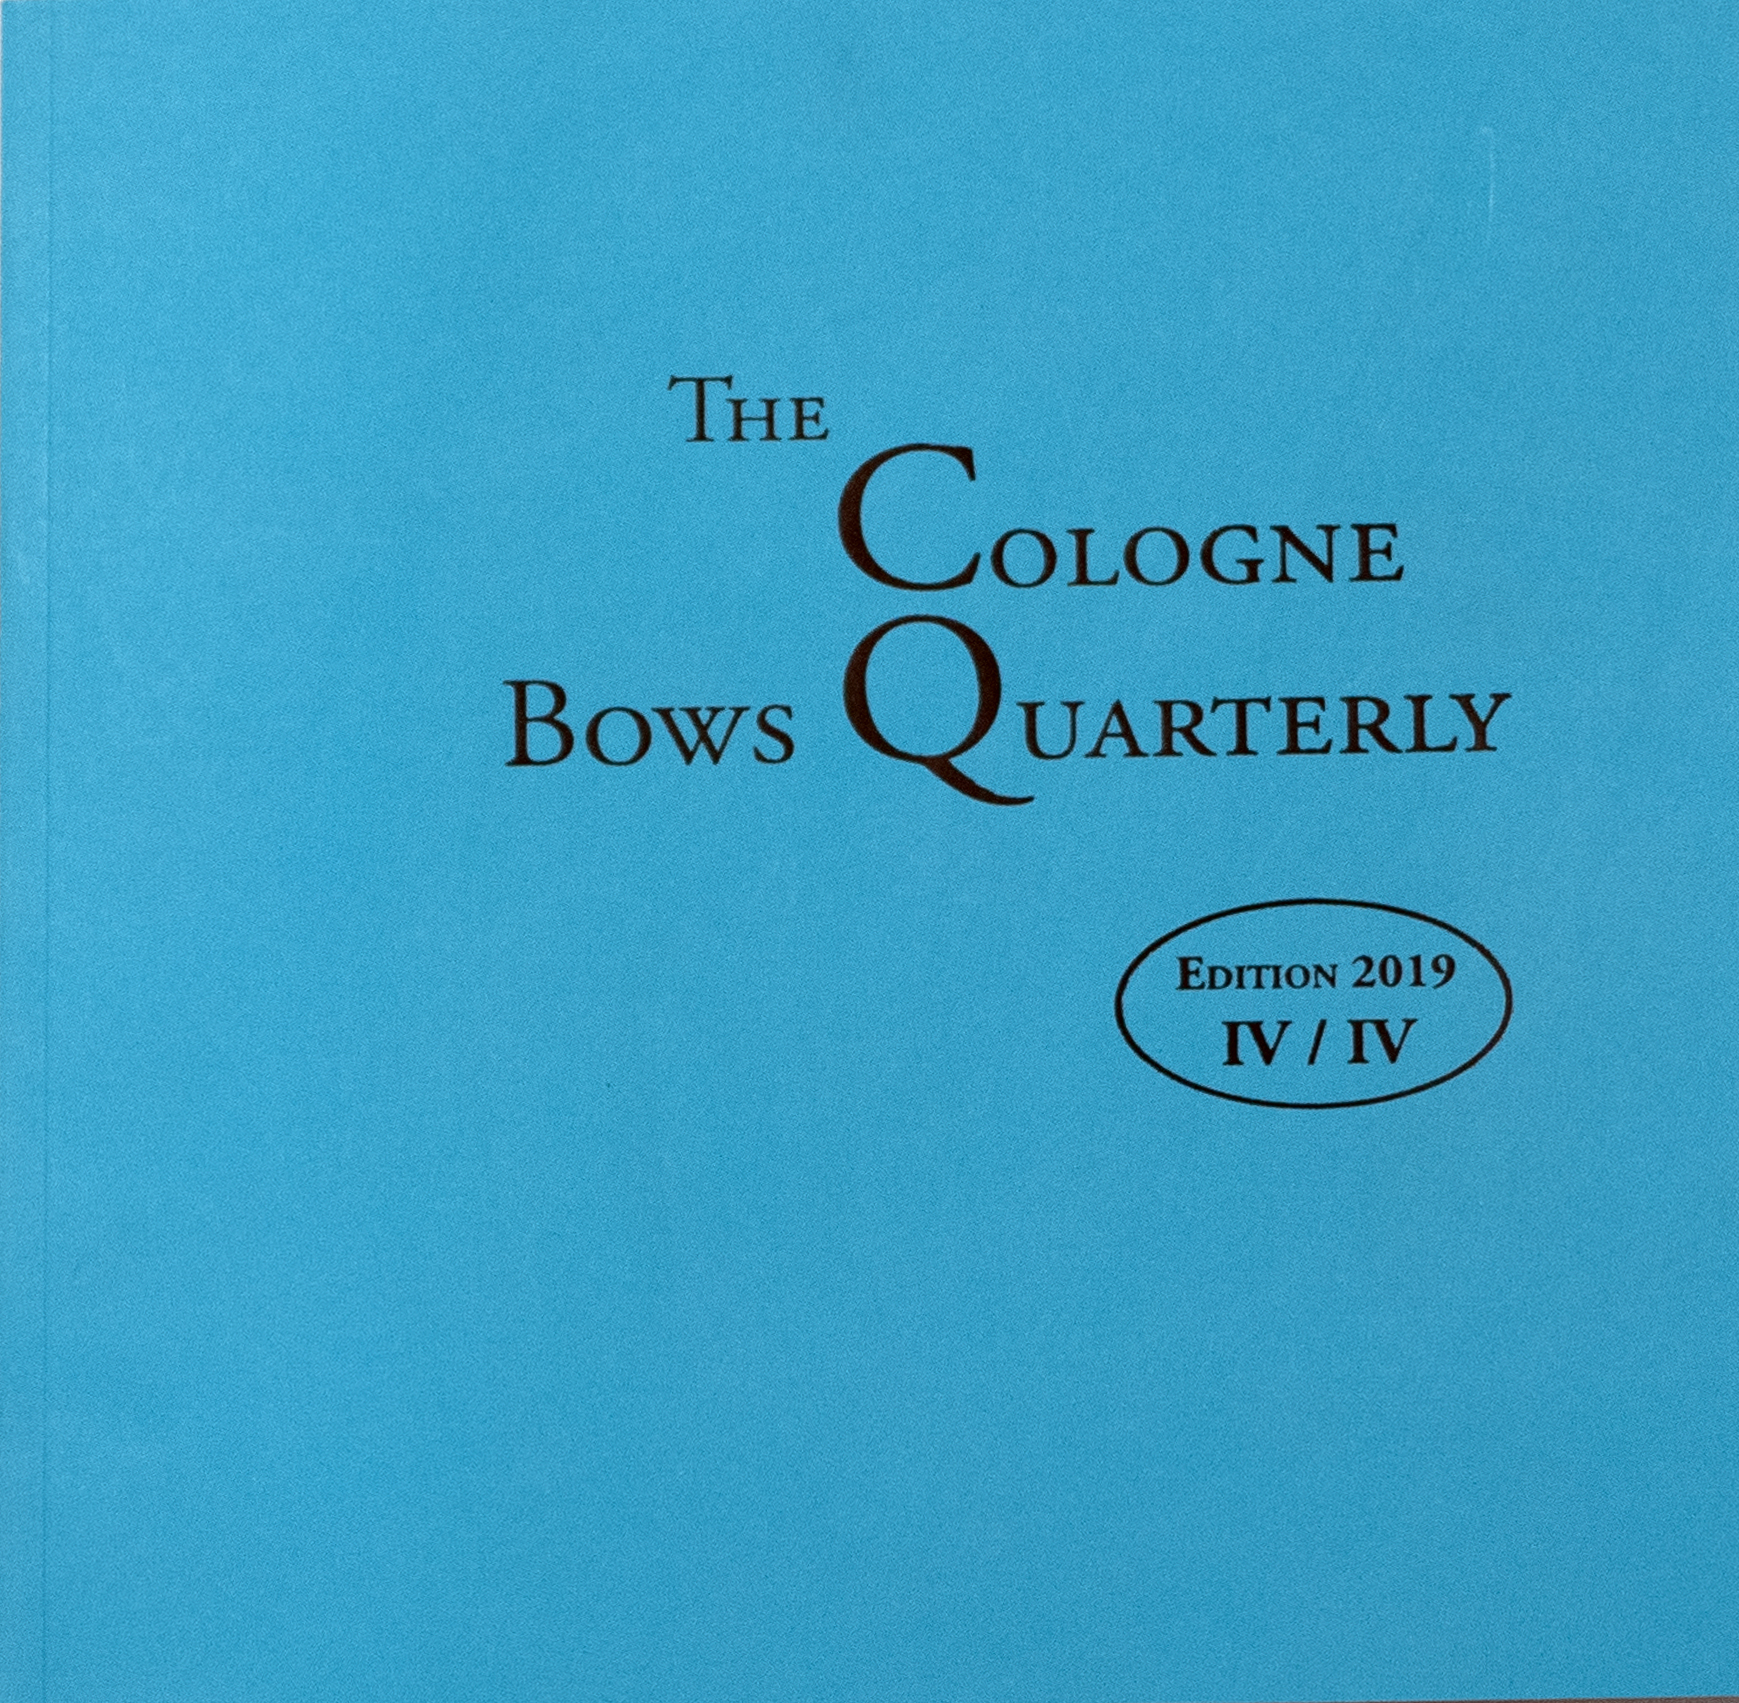 The Cologne Bows Quarterly - Edition 2019 IV / IV